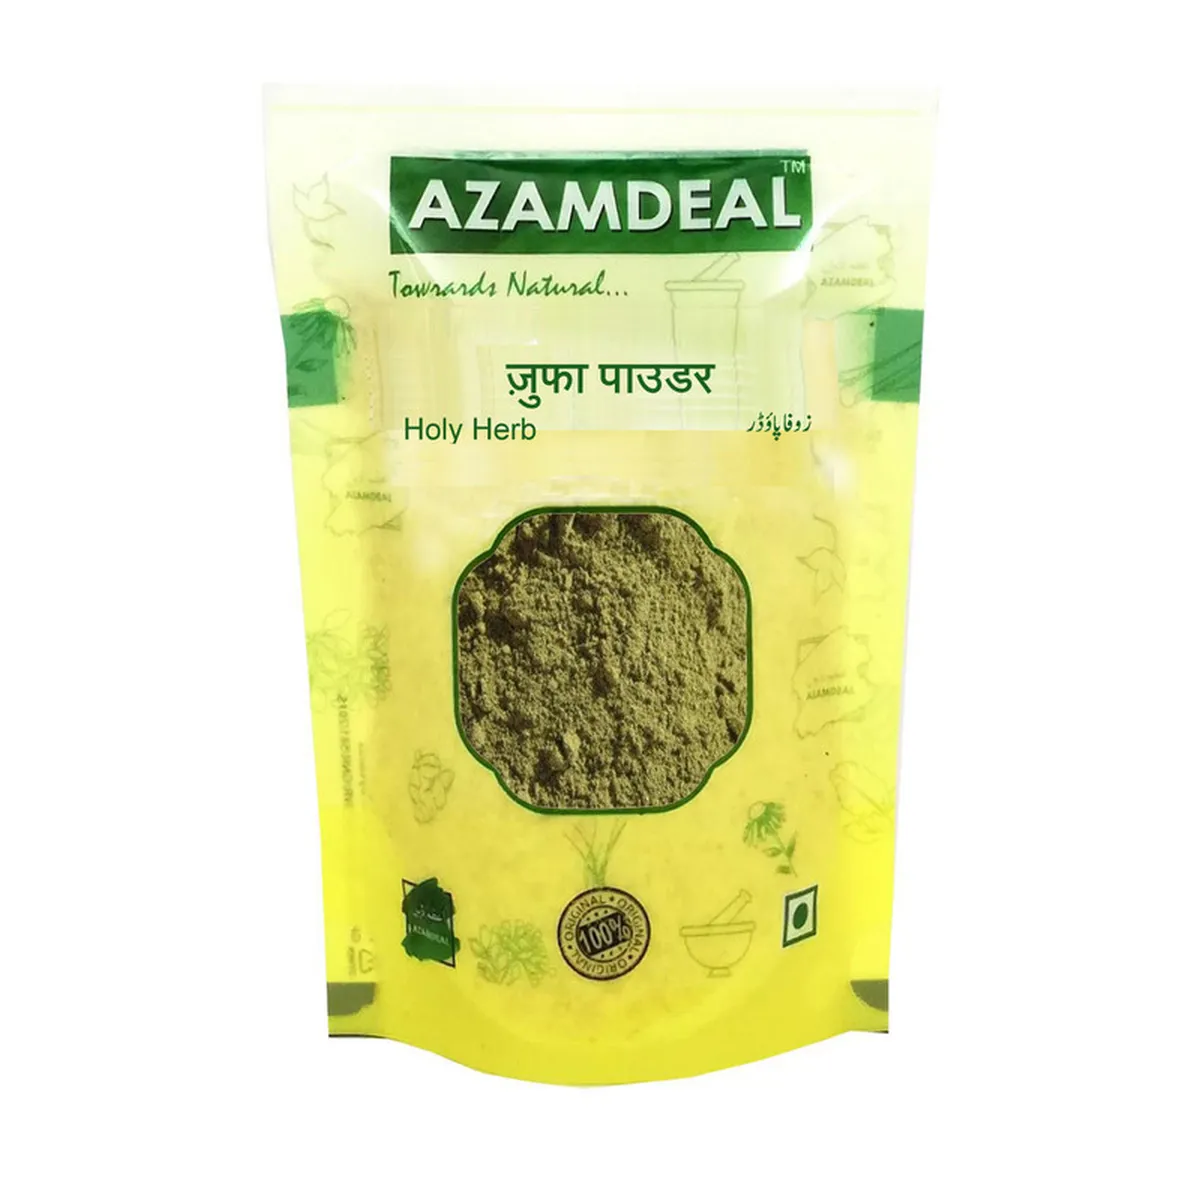 Azamdeal Zufa Powder 100g